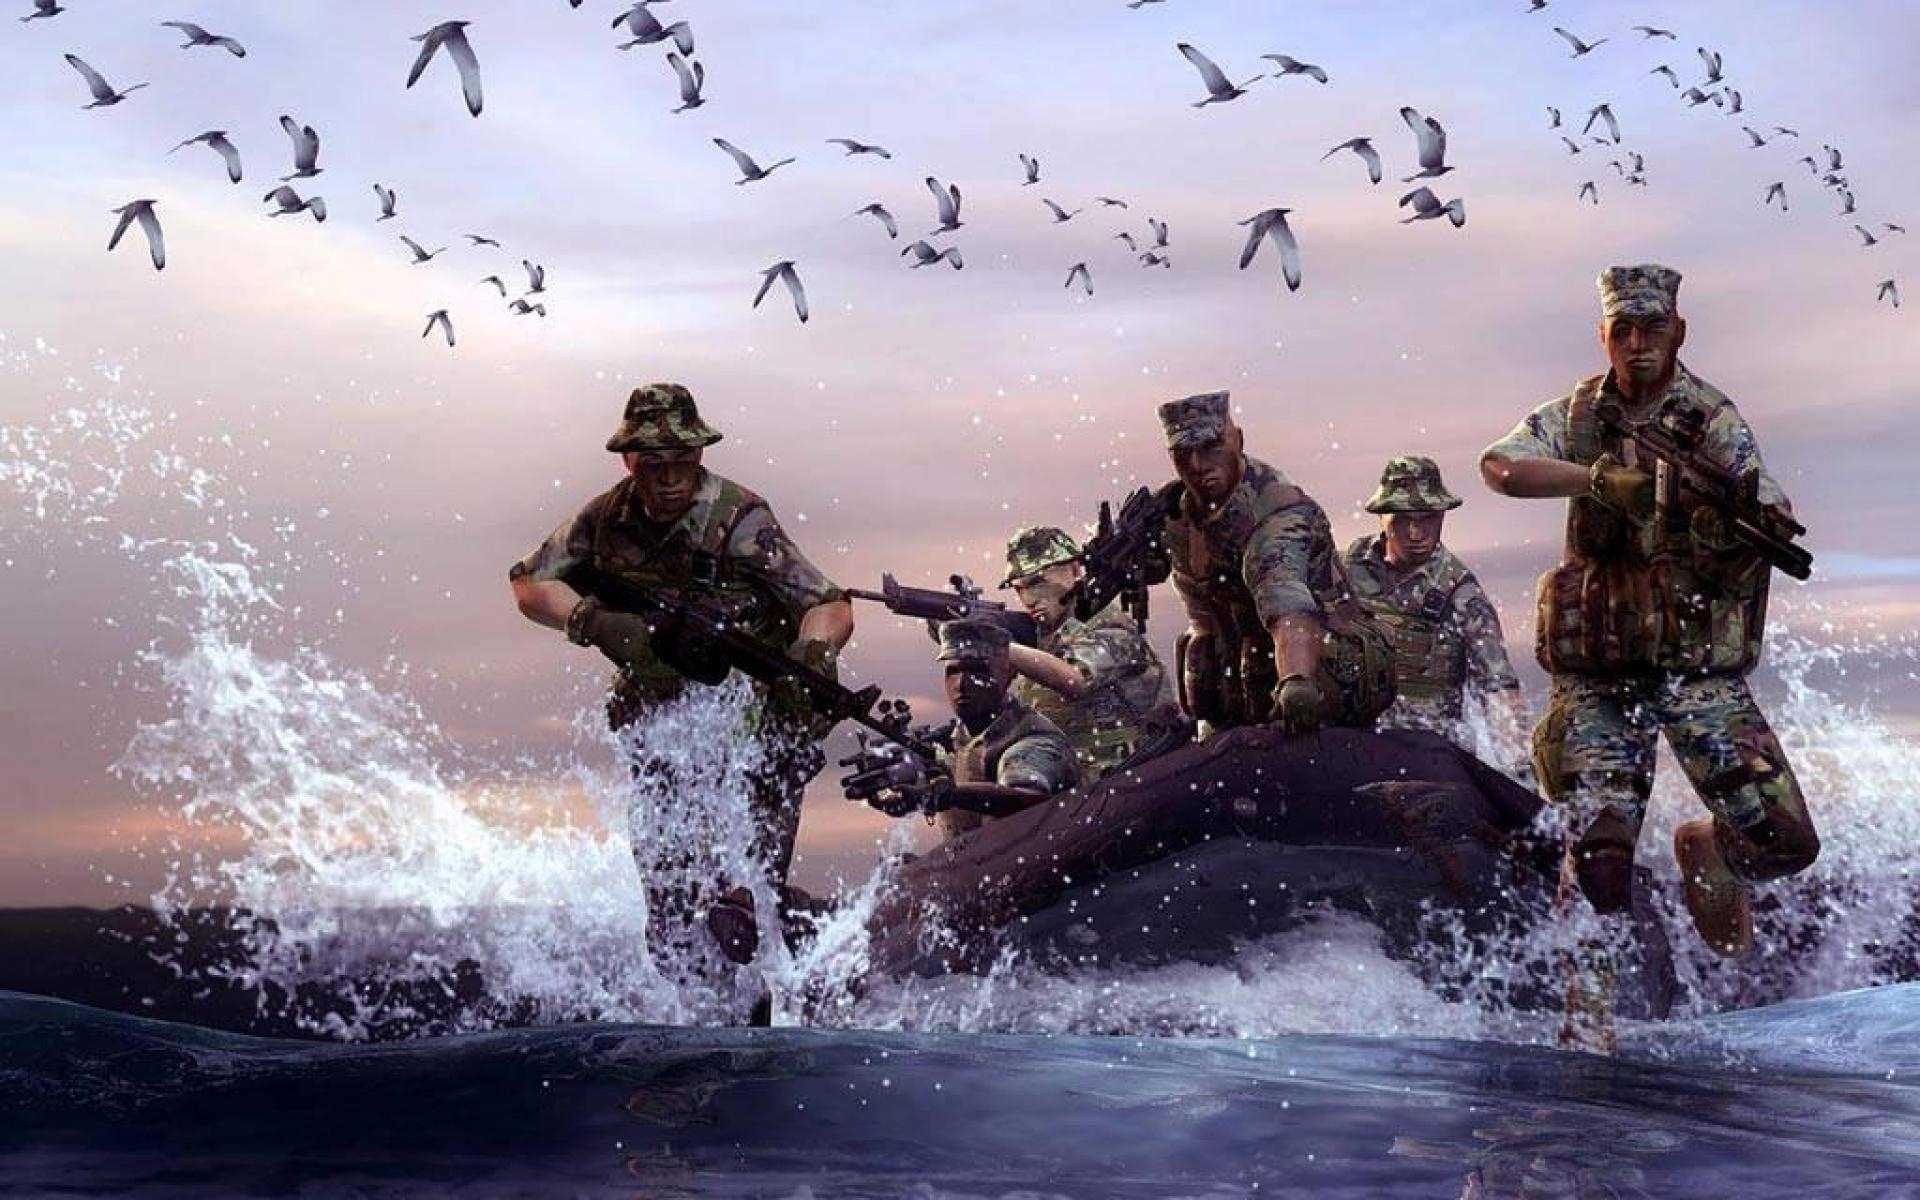 US Marines iPhone Wallpaper by JJZ109 on DeviantArt